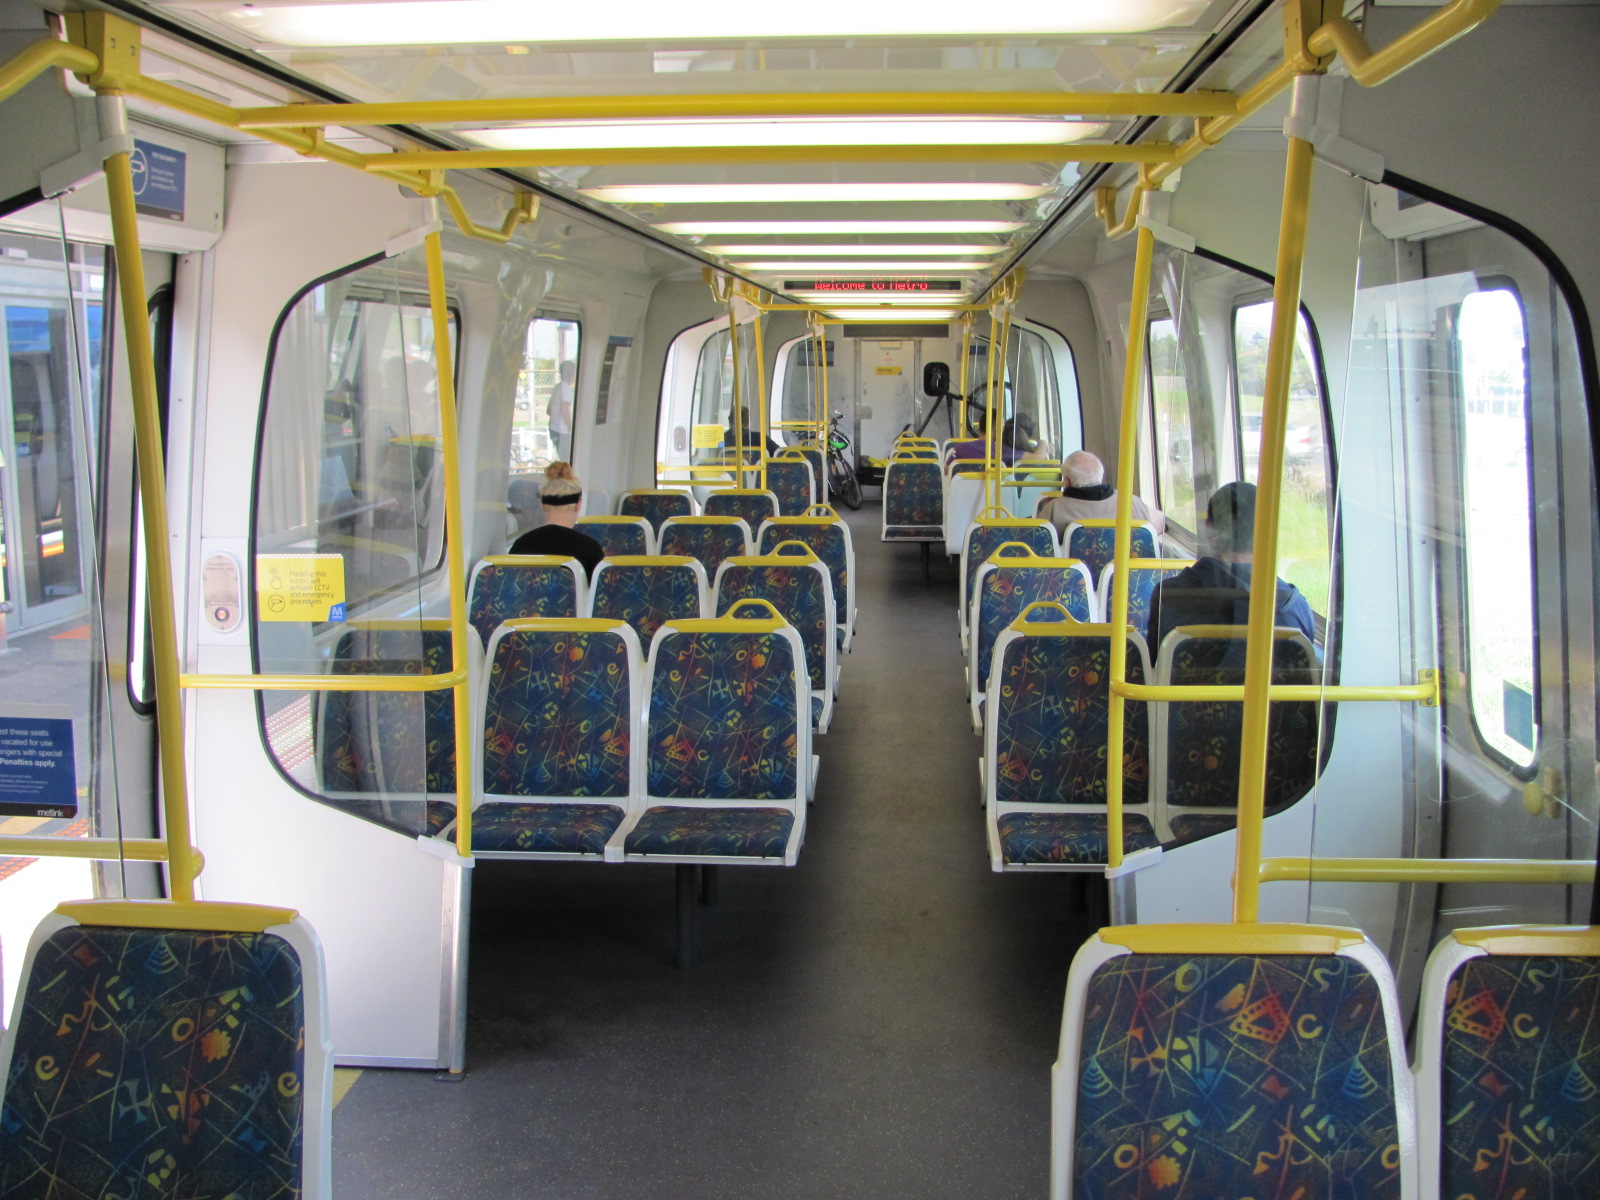 File:Melbourne train interior OIC.jpg - Wikimedia Commons